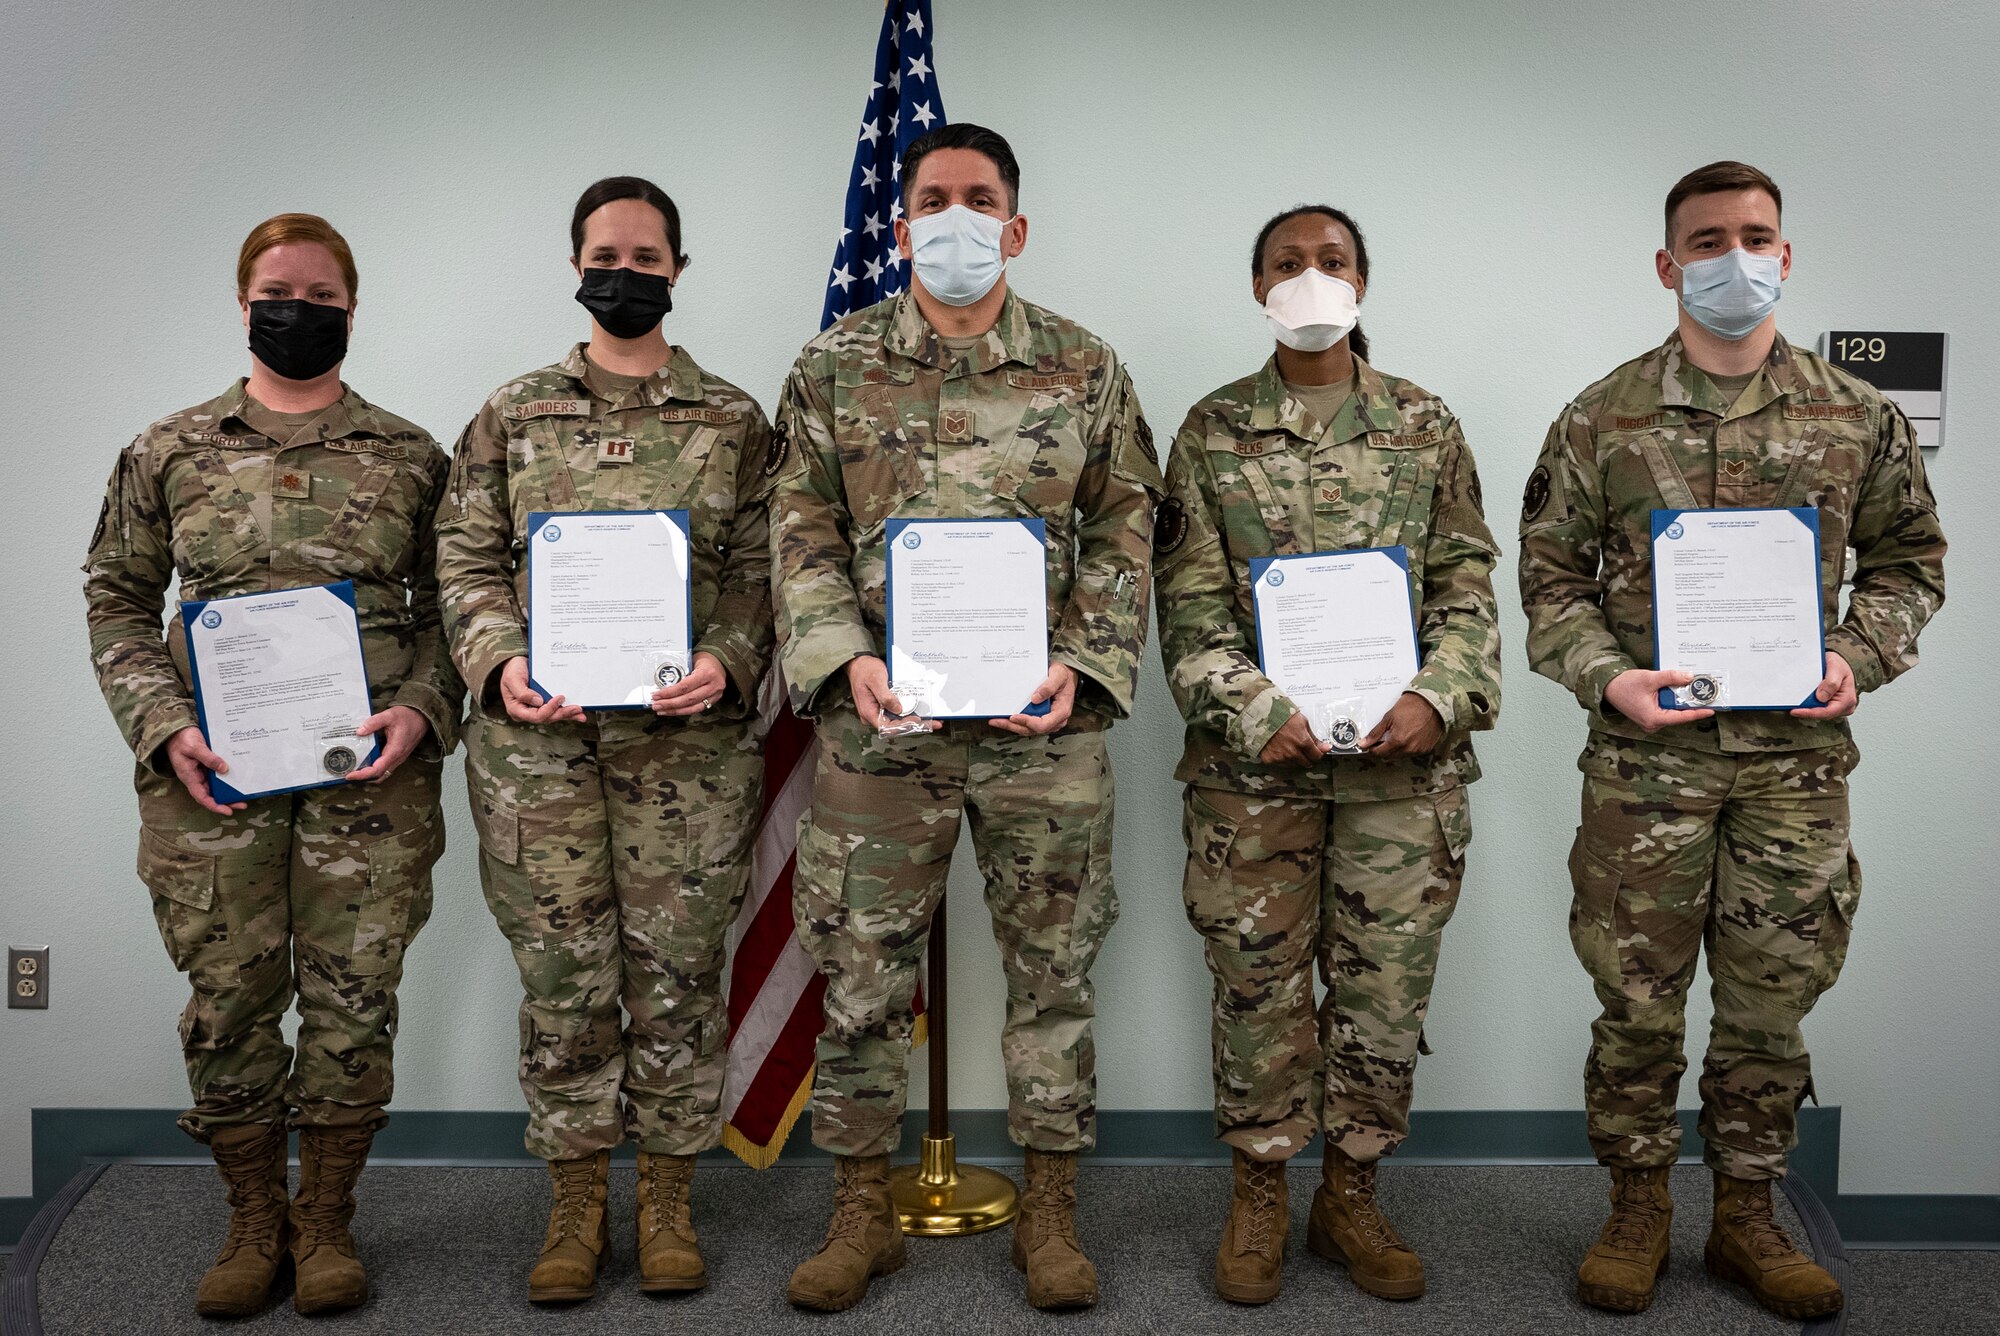 Five medical Airmen hold awards in front of U.S. flag.